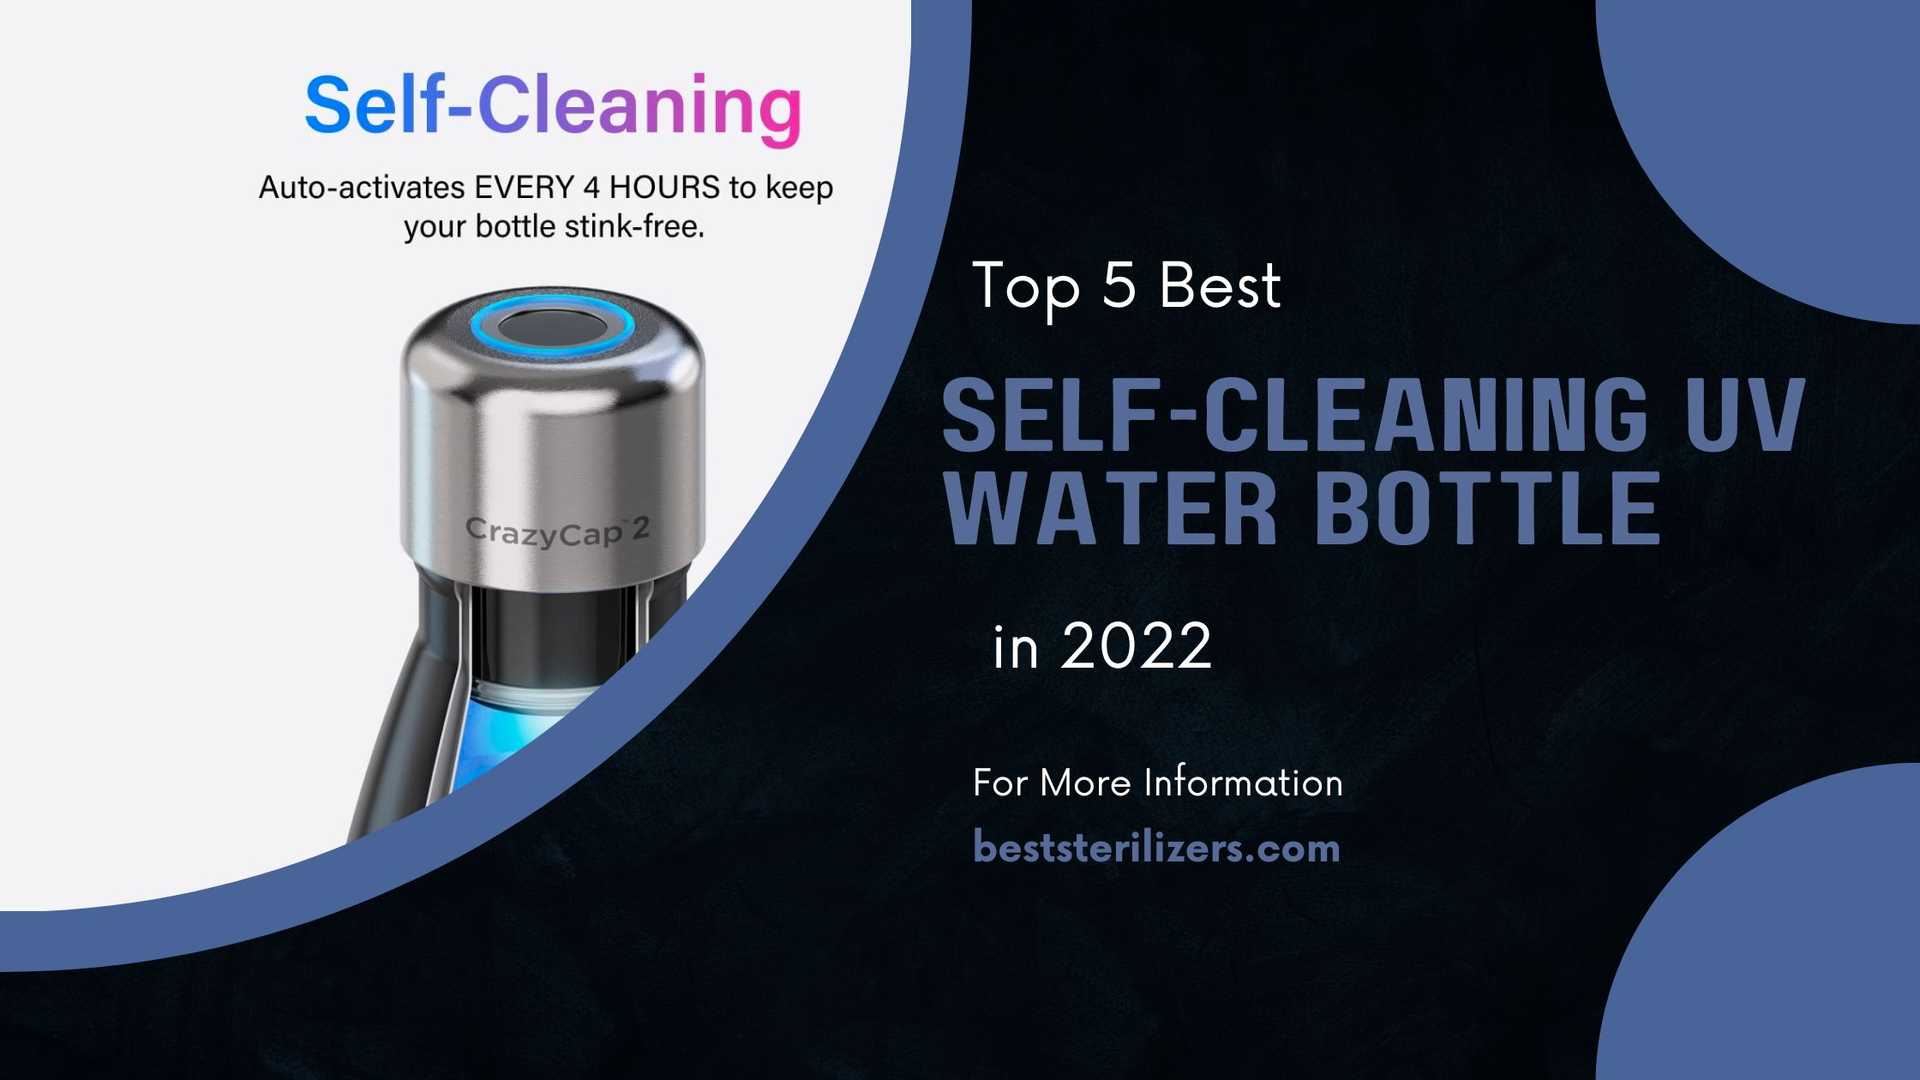 Top 5 Best Self-Cleaning UV Water Bottle in 2022